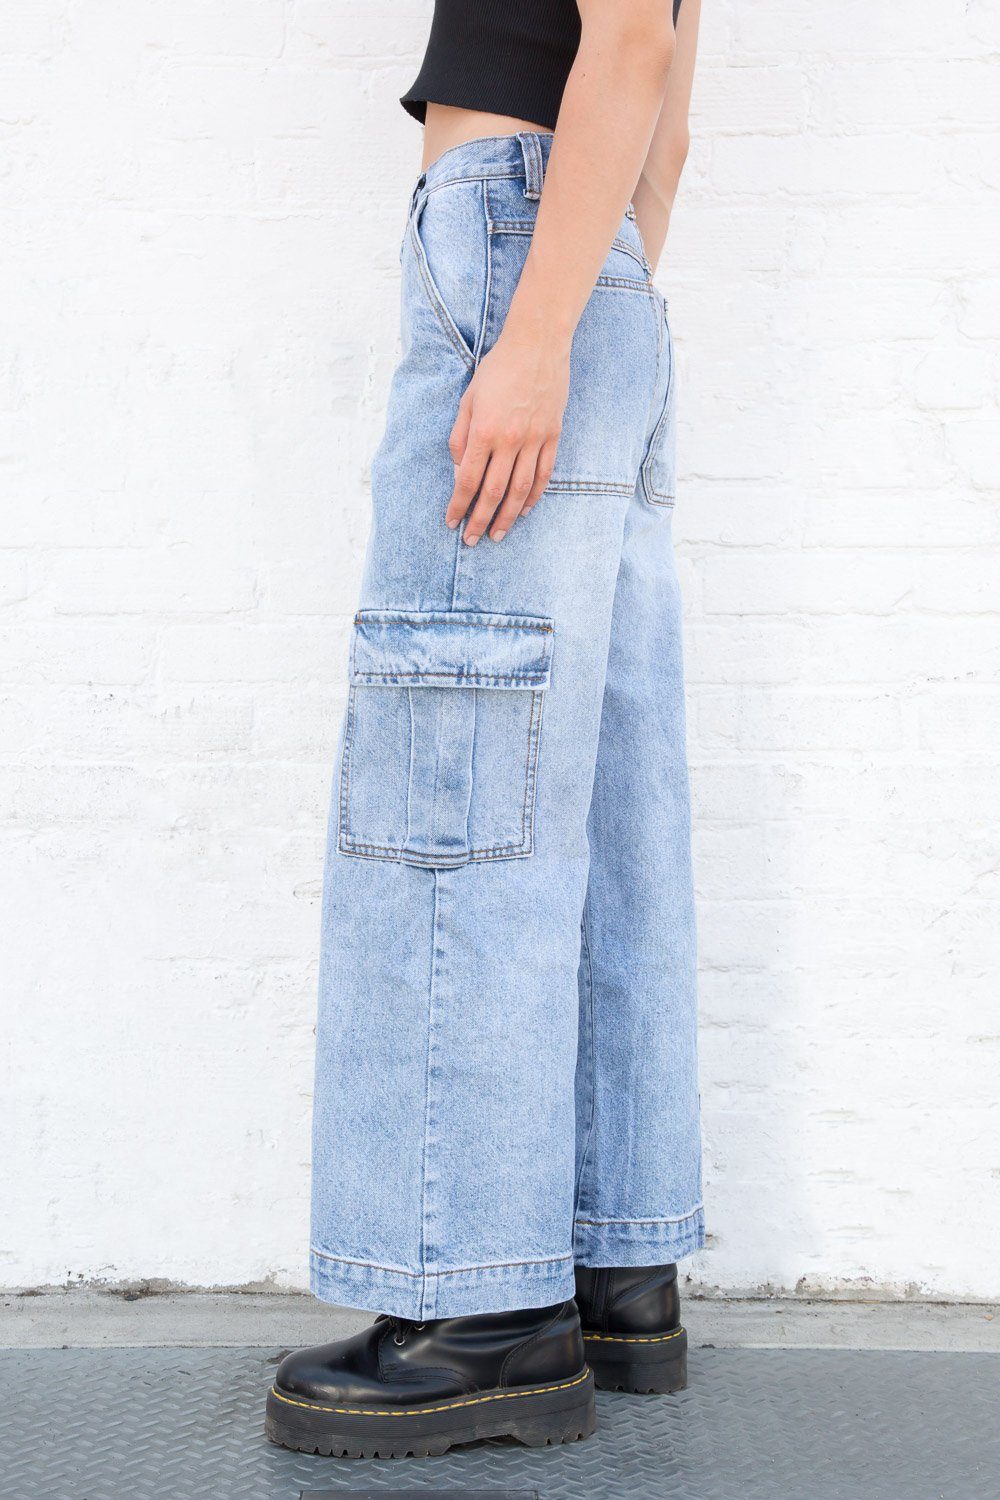 Brandy Melville Boyfriend Jeans Flash 51% online-pmo.com